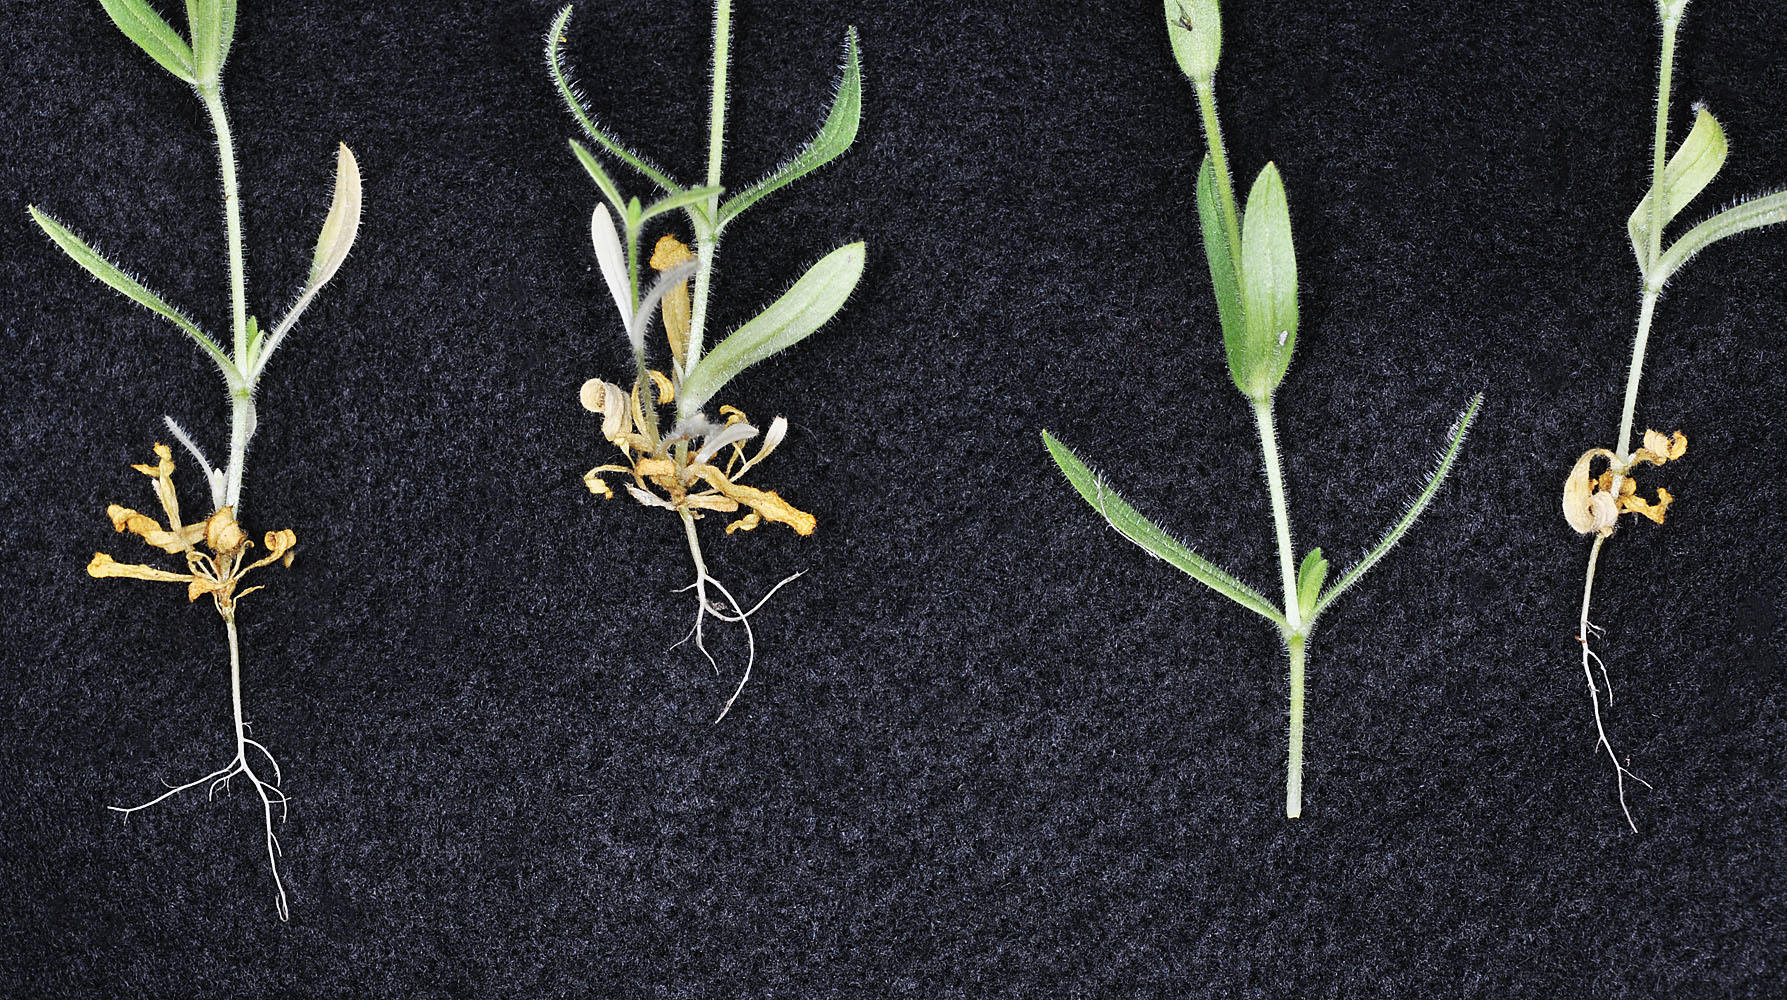 Flora of Eastern Washington Image: Cerastium brachypodum